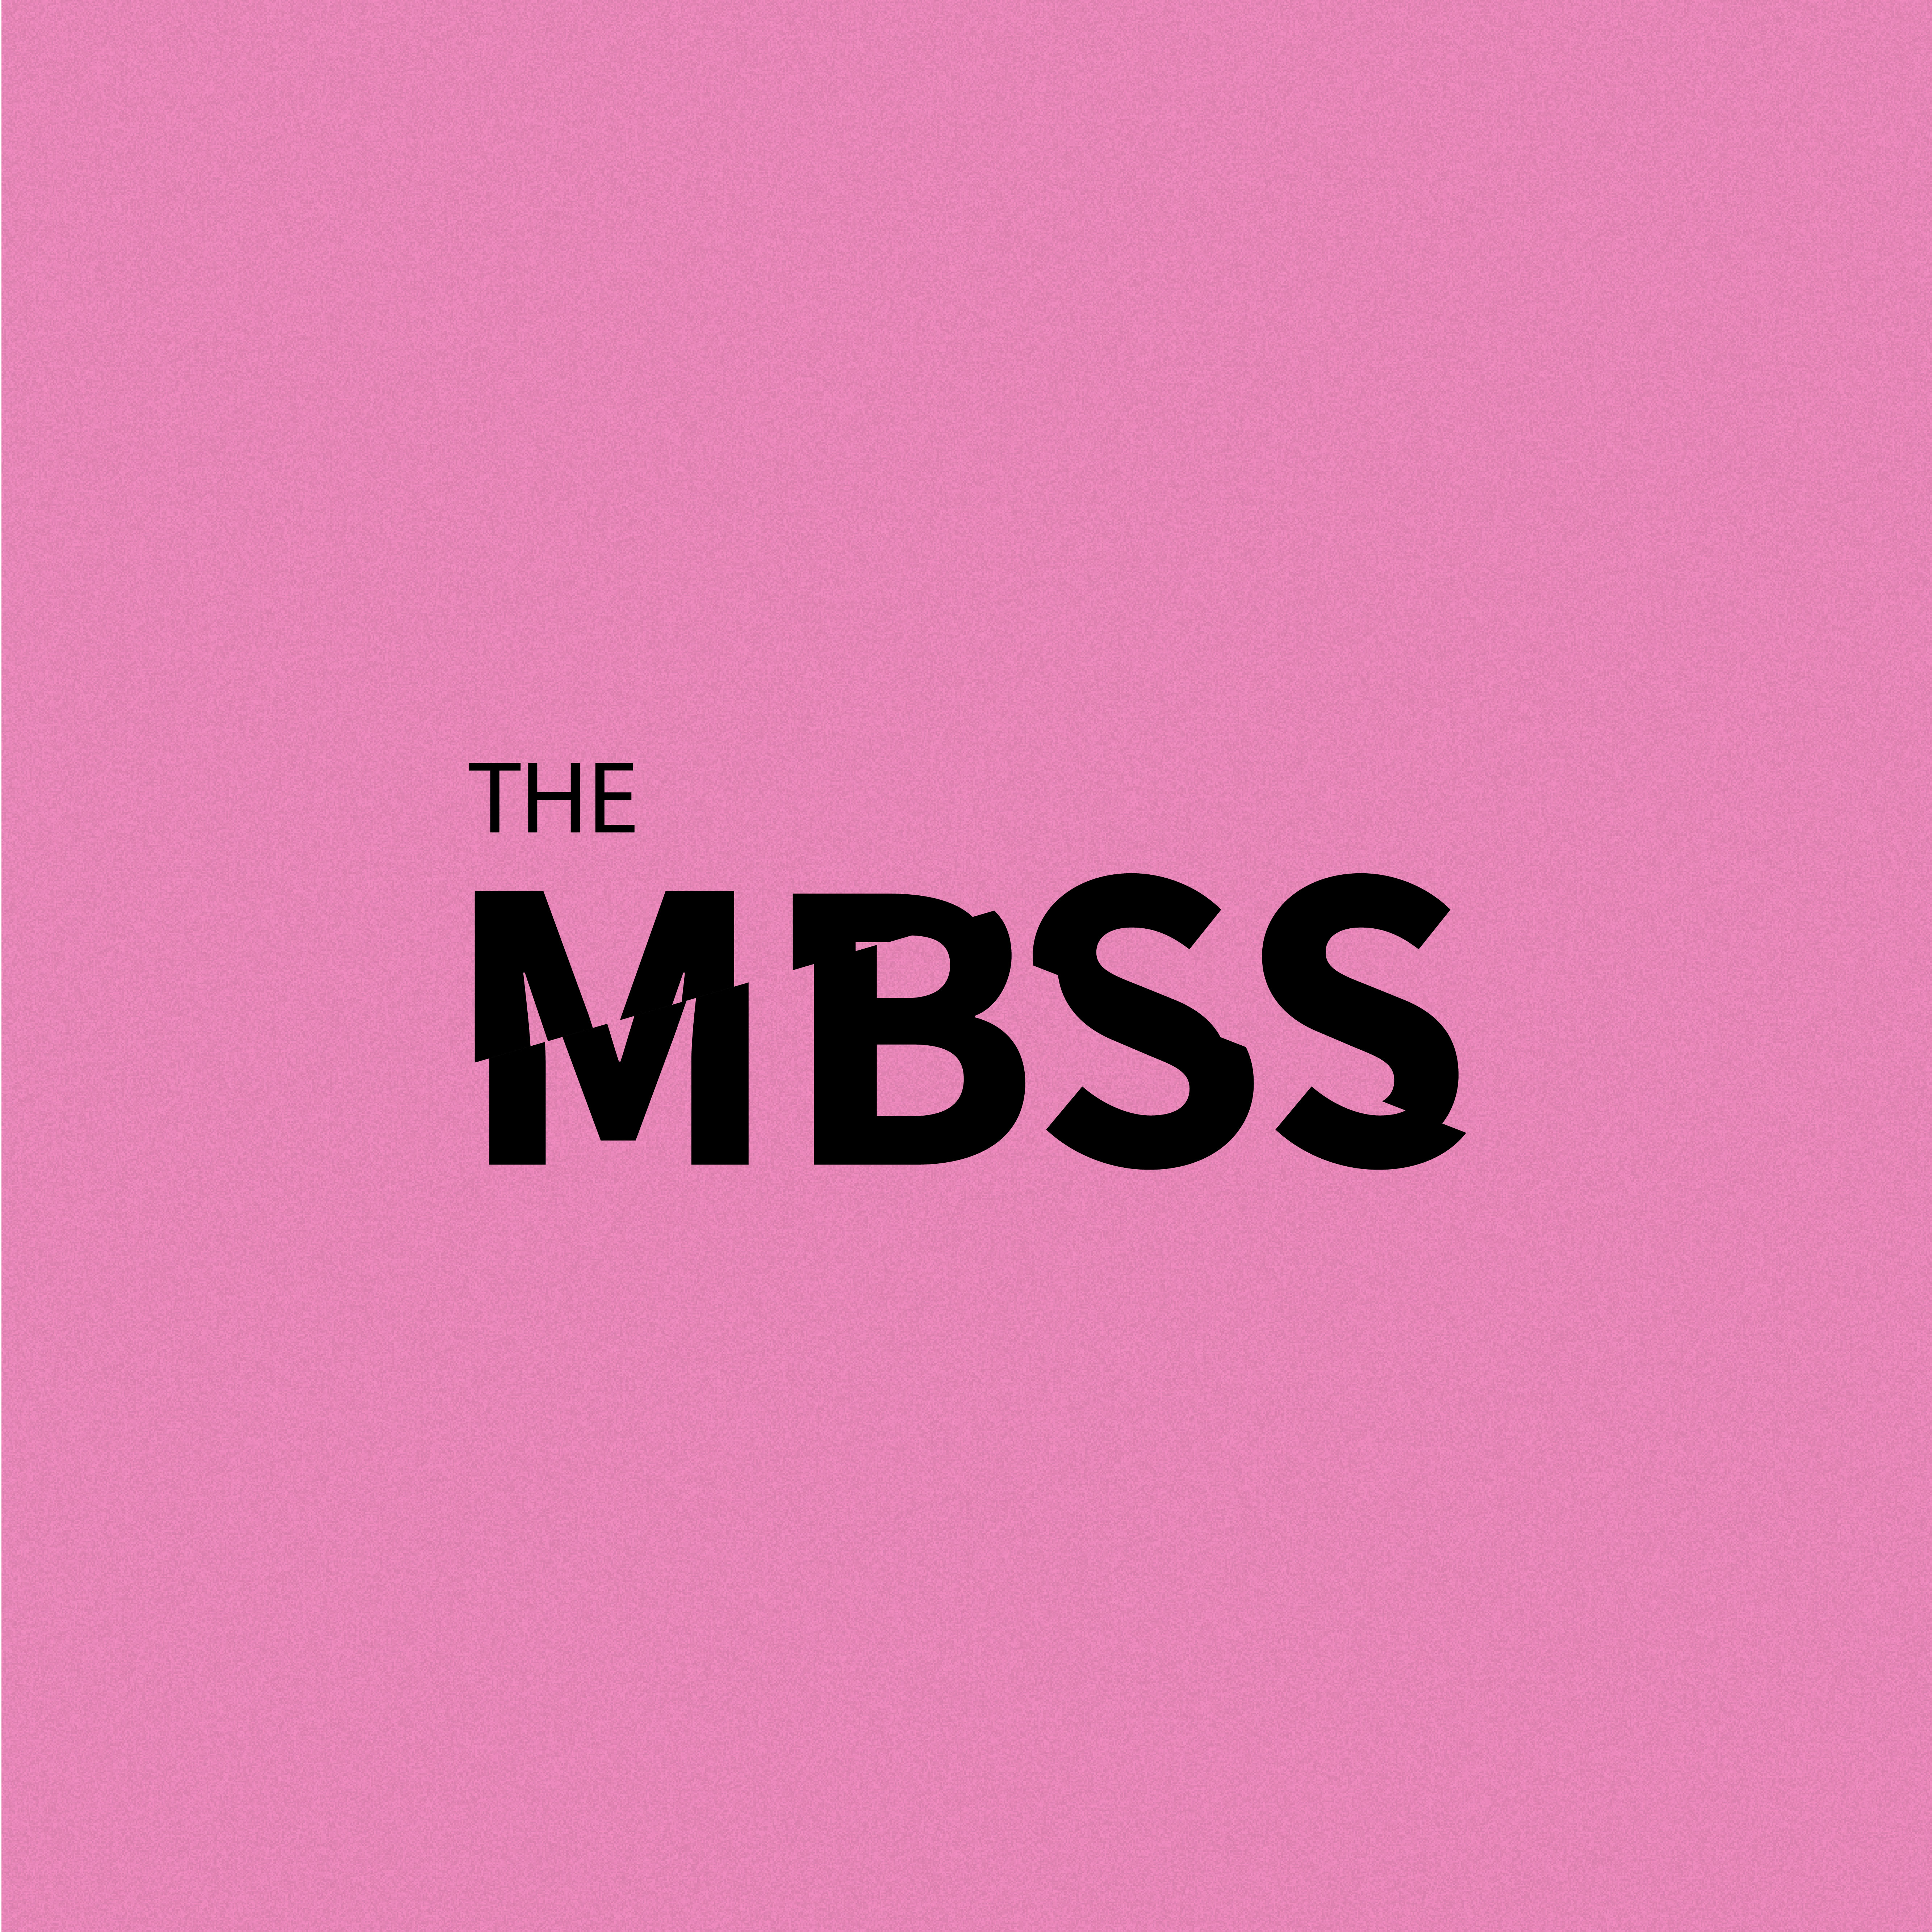 THE MBSS